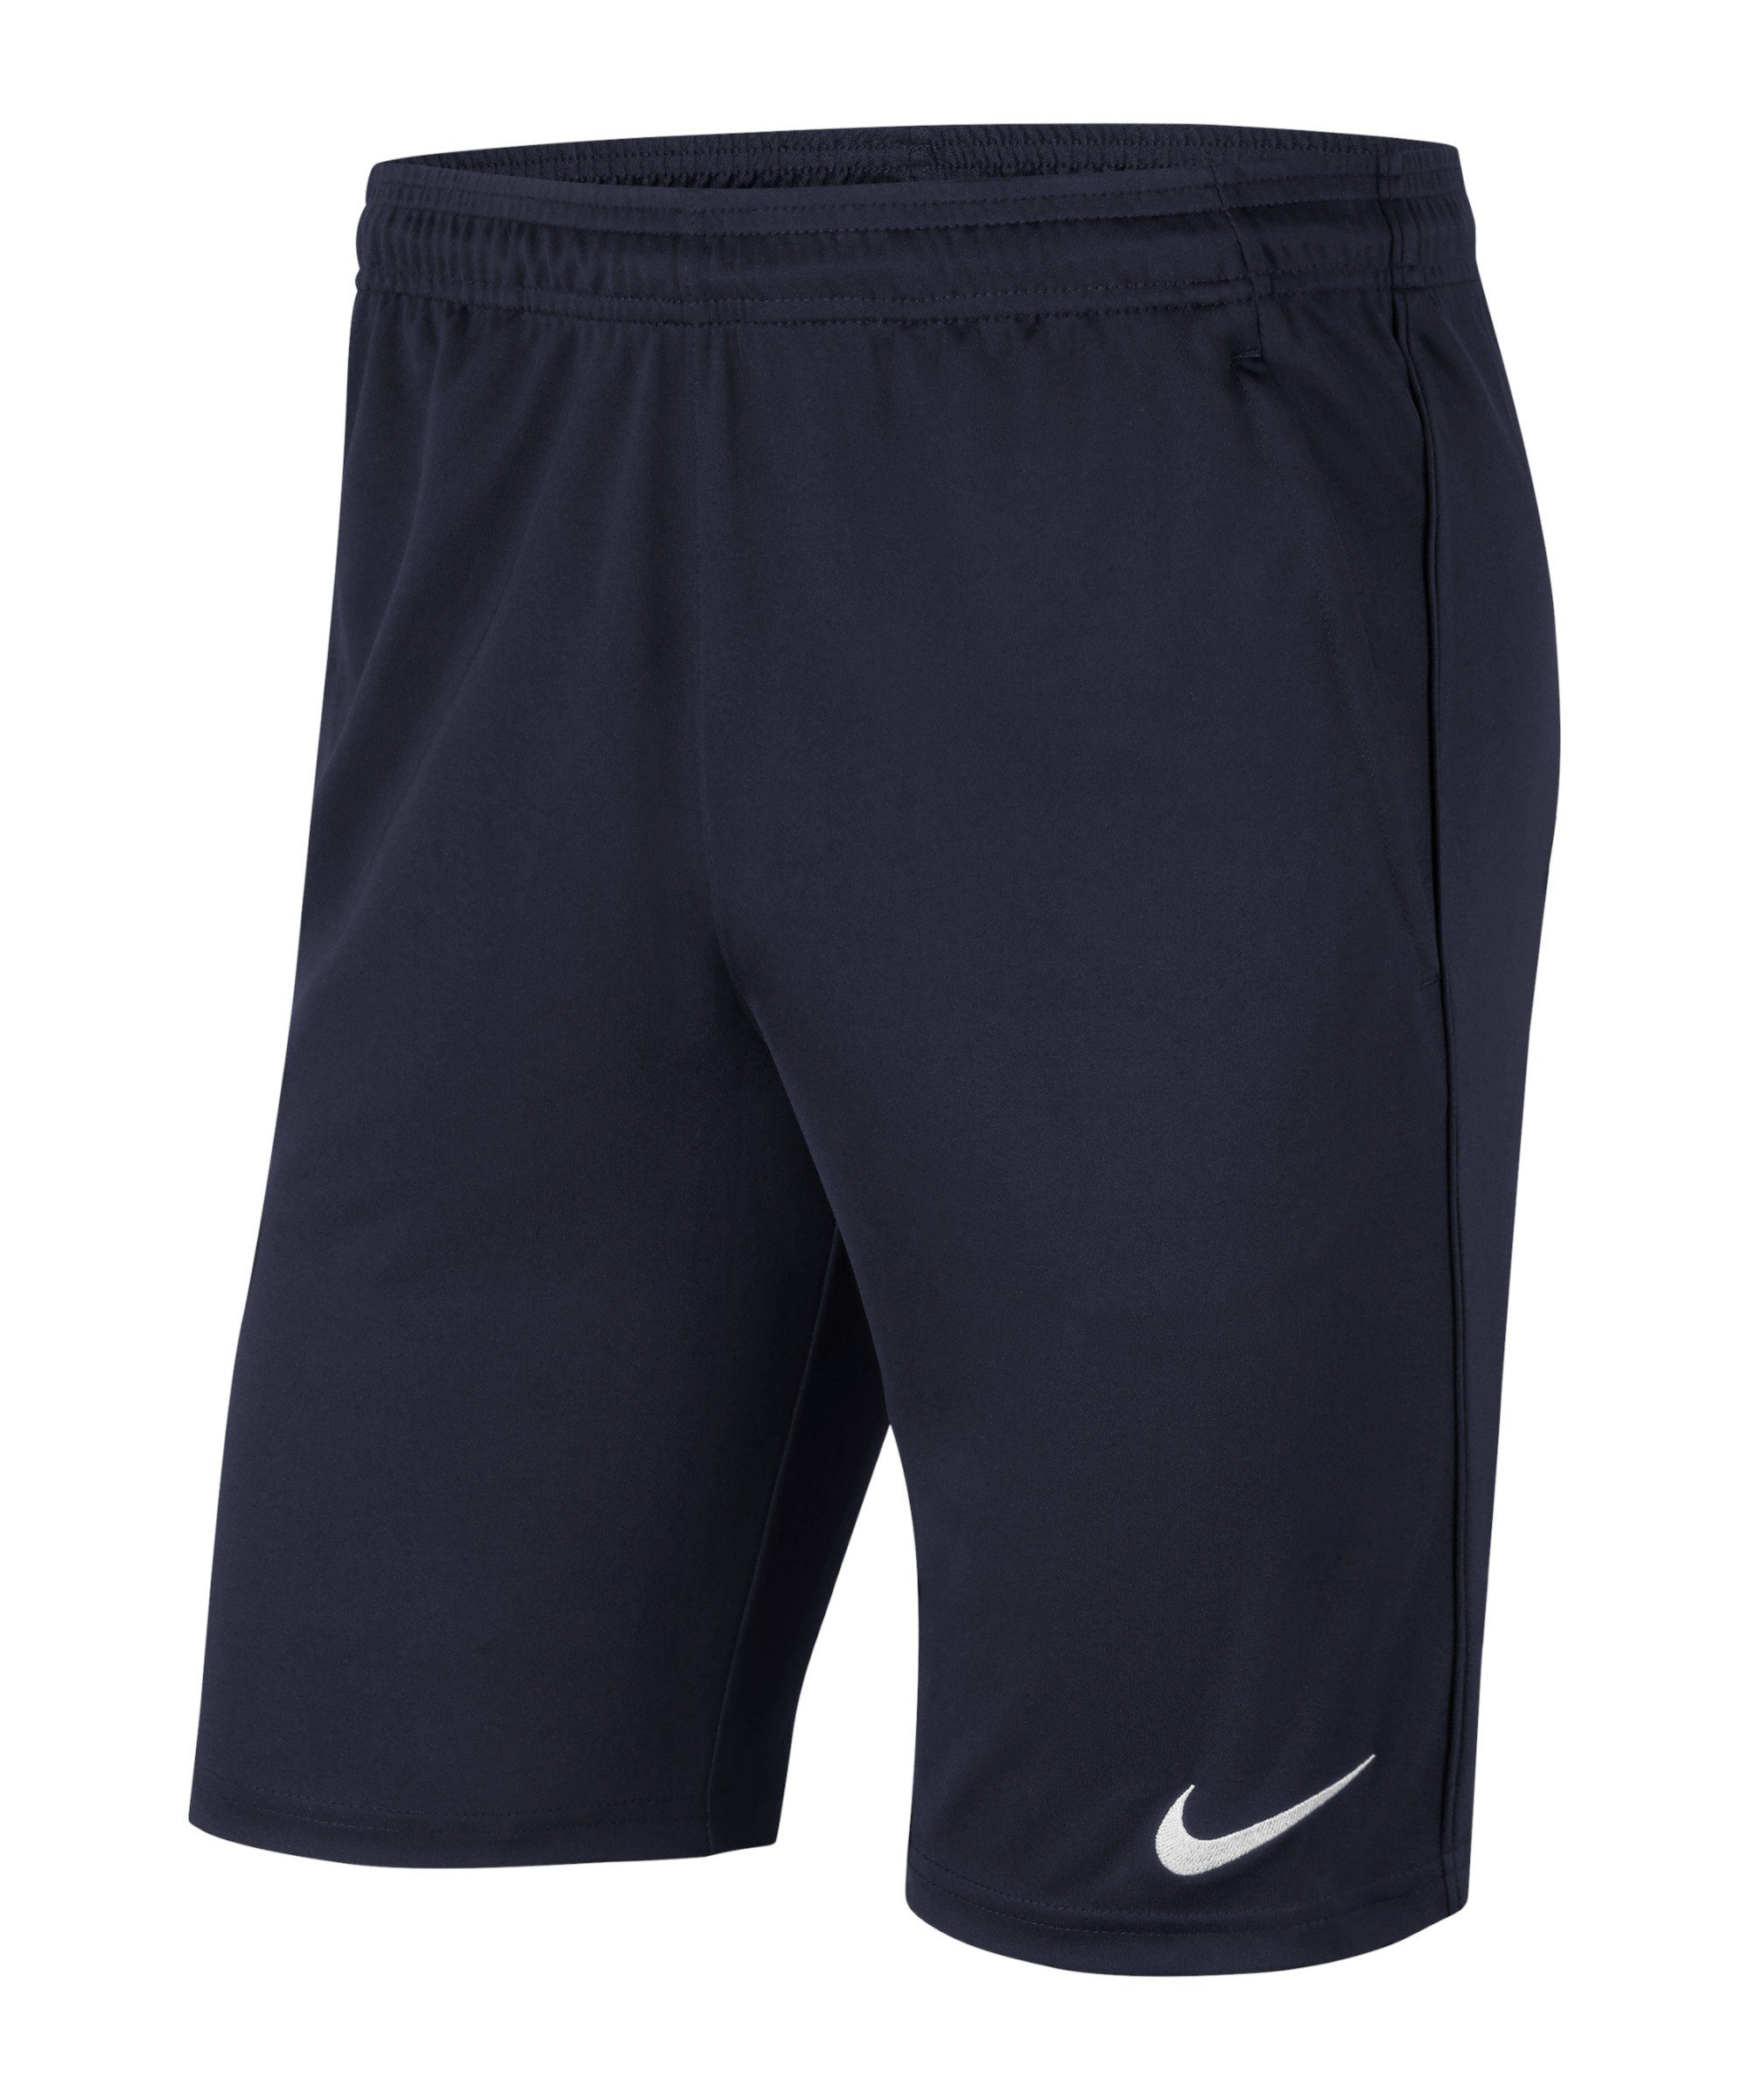 blauweiss Park Sporthose 20 Short Knit Nike